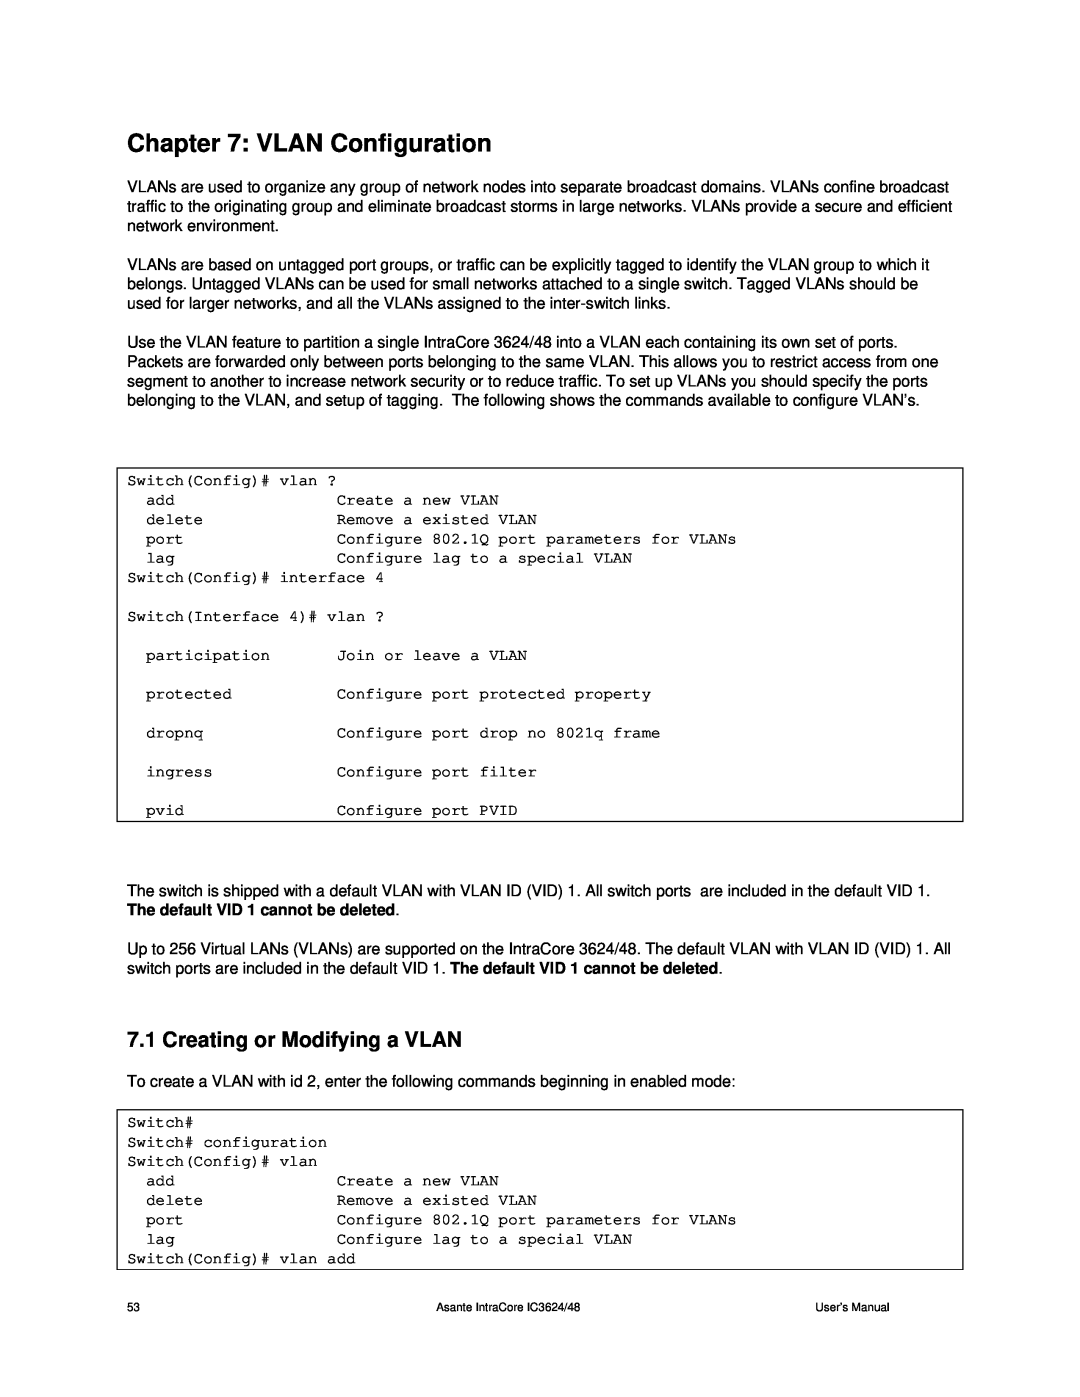 Asante Technologies 3624/48 user manual VLAN Configuration, Creating or Modifying a VLAN 